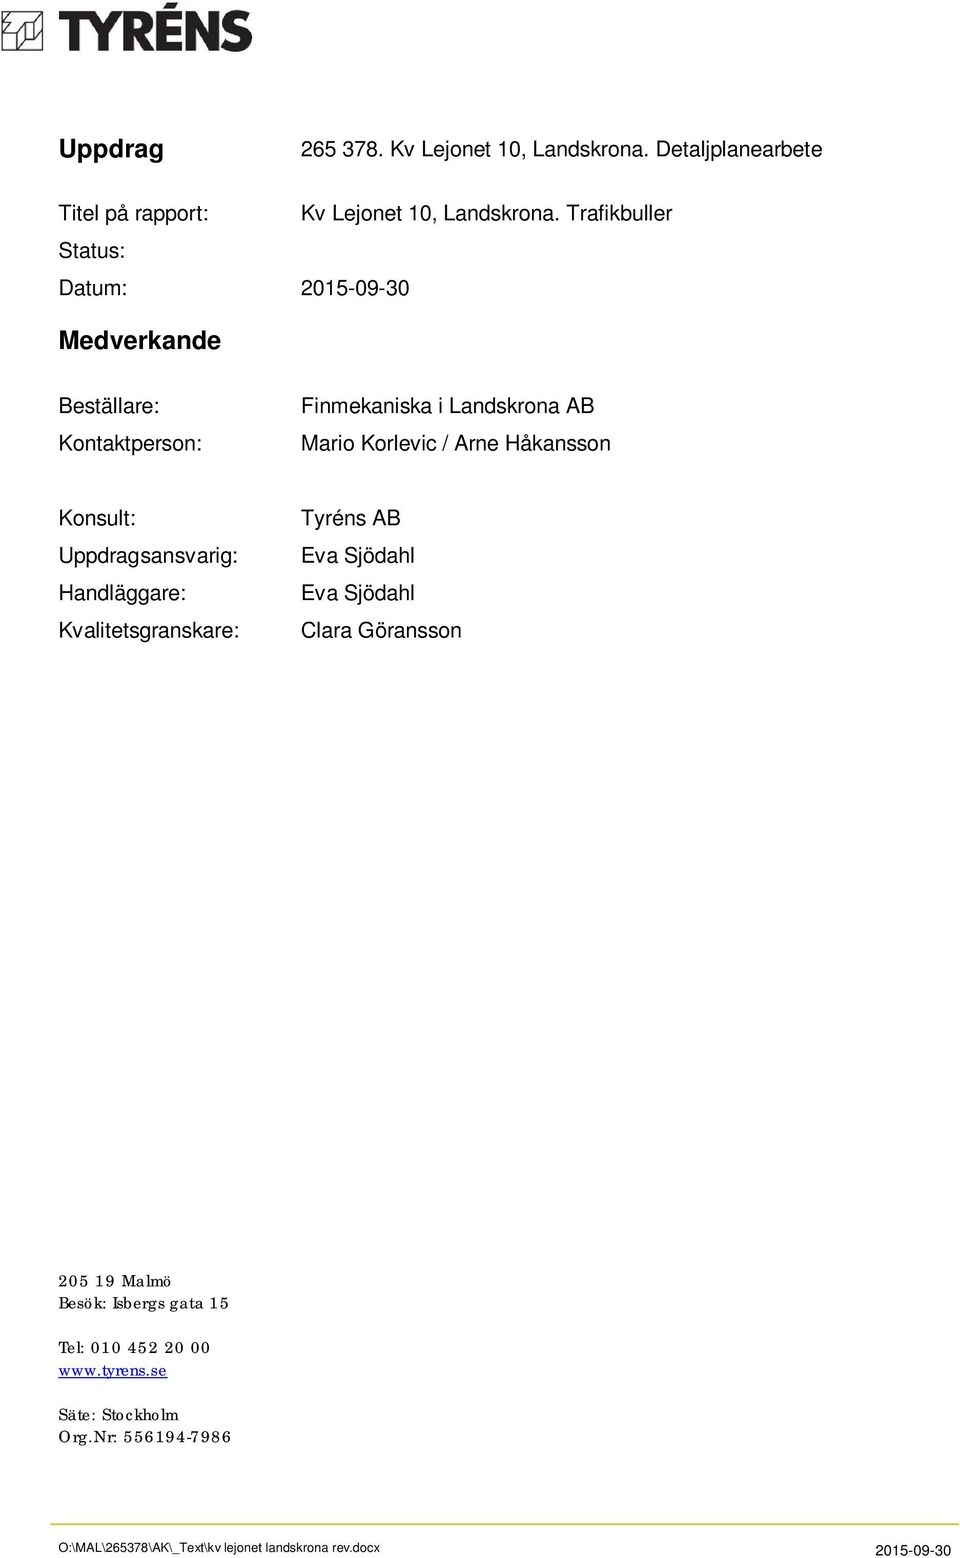 Korlevic / Arne Håkansson Konsult: Uppdragsansvarig: Handläggare: Kvalitetsgranskare: Tyréns AB Eva Sjödahl Eva